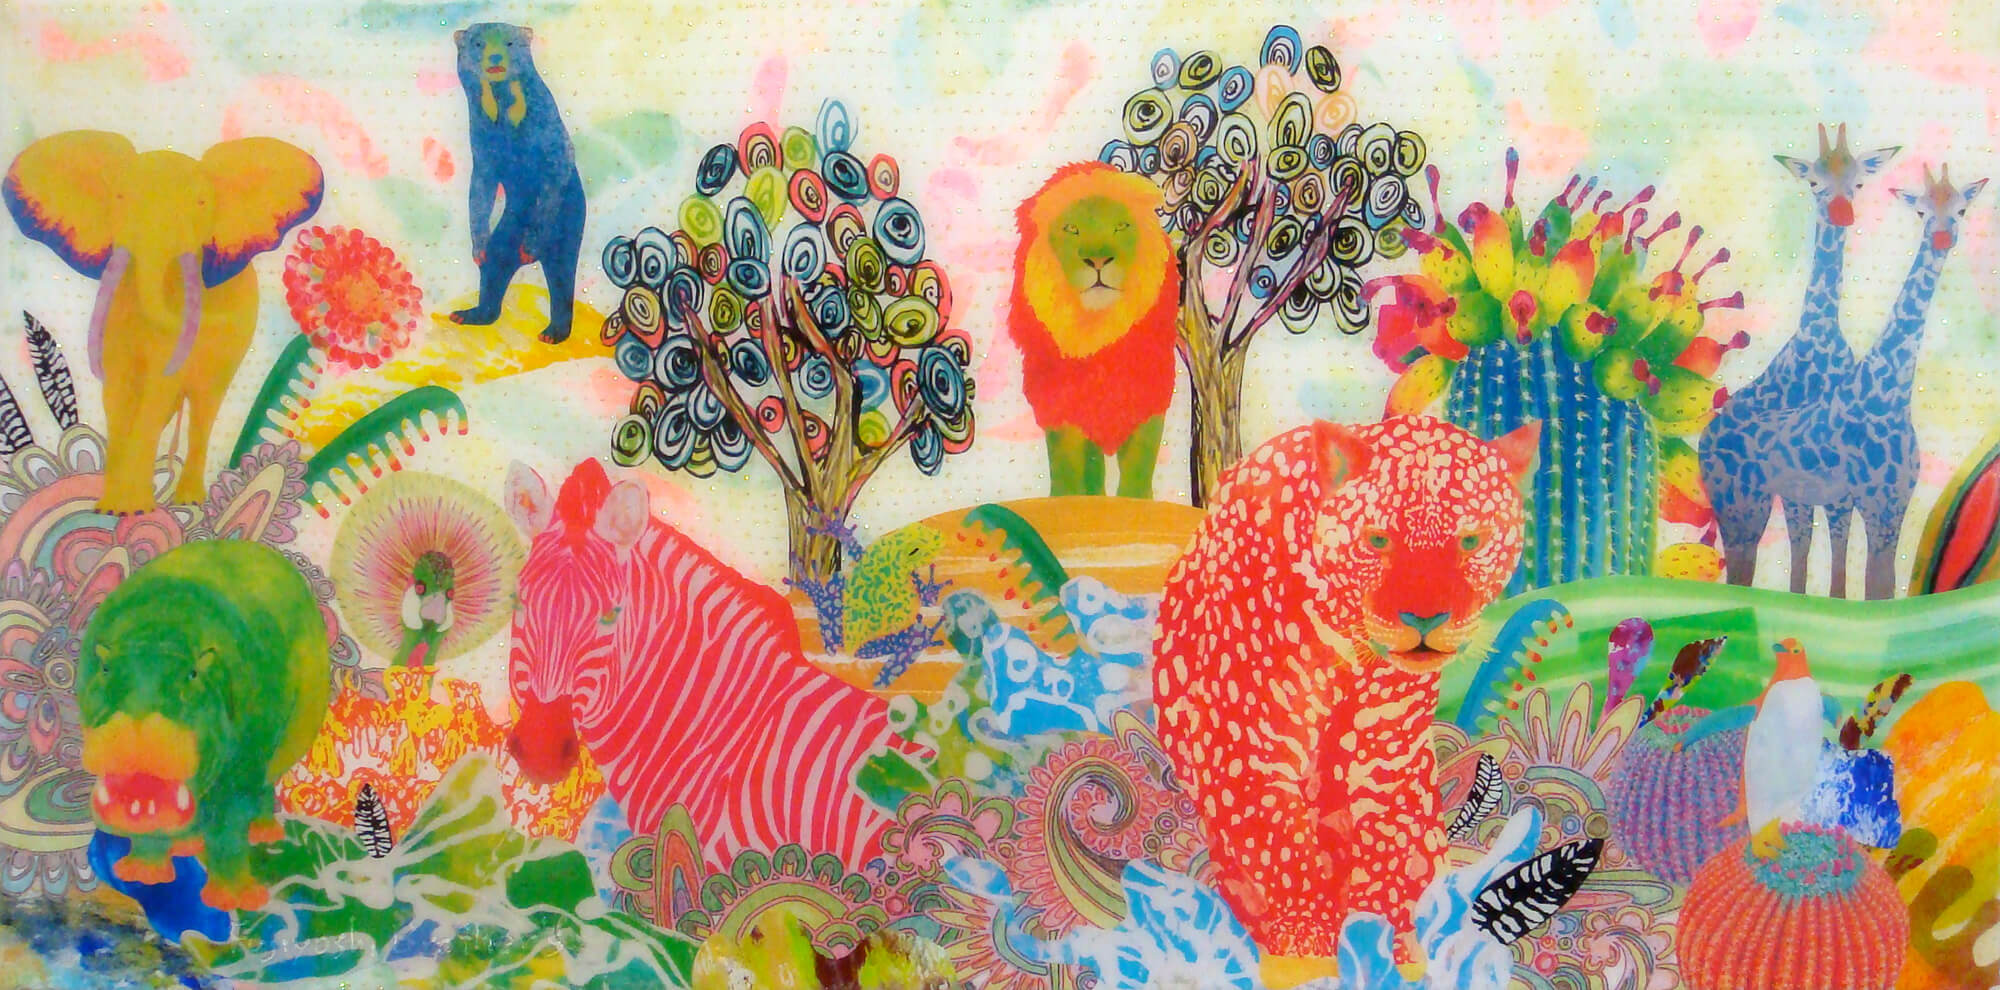 Animal-wonderland-20改行
Acrylic glitter paper and ink on canvas, 300×600mm, 2011